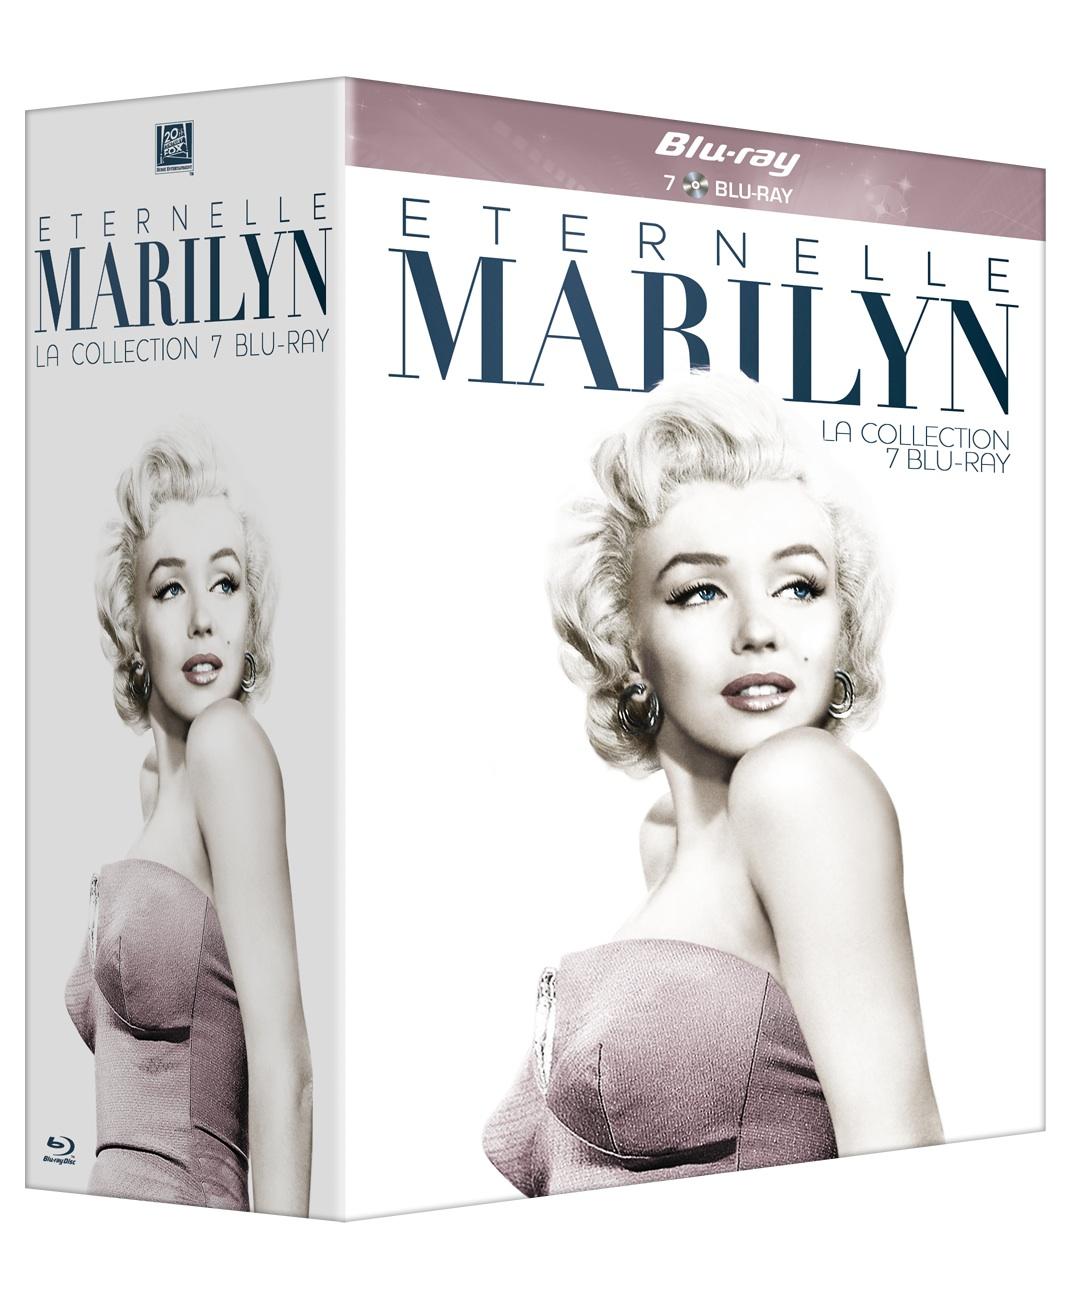 Marilyn Monroe célébrée dans un coffret Blu-Ray !